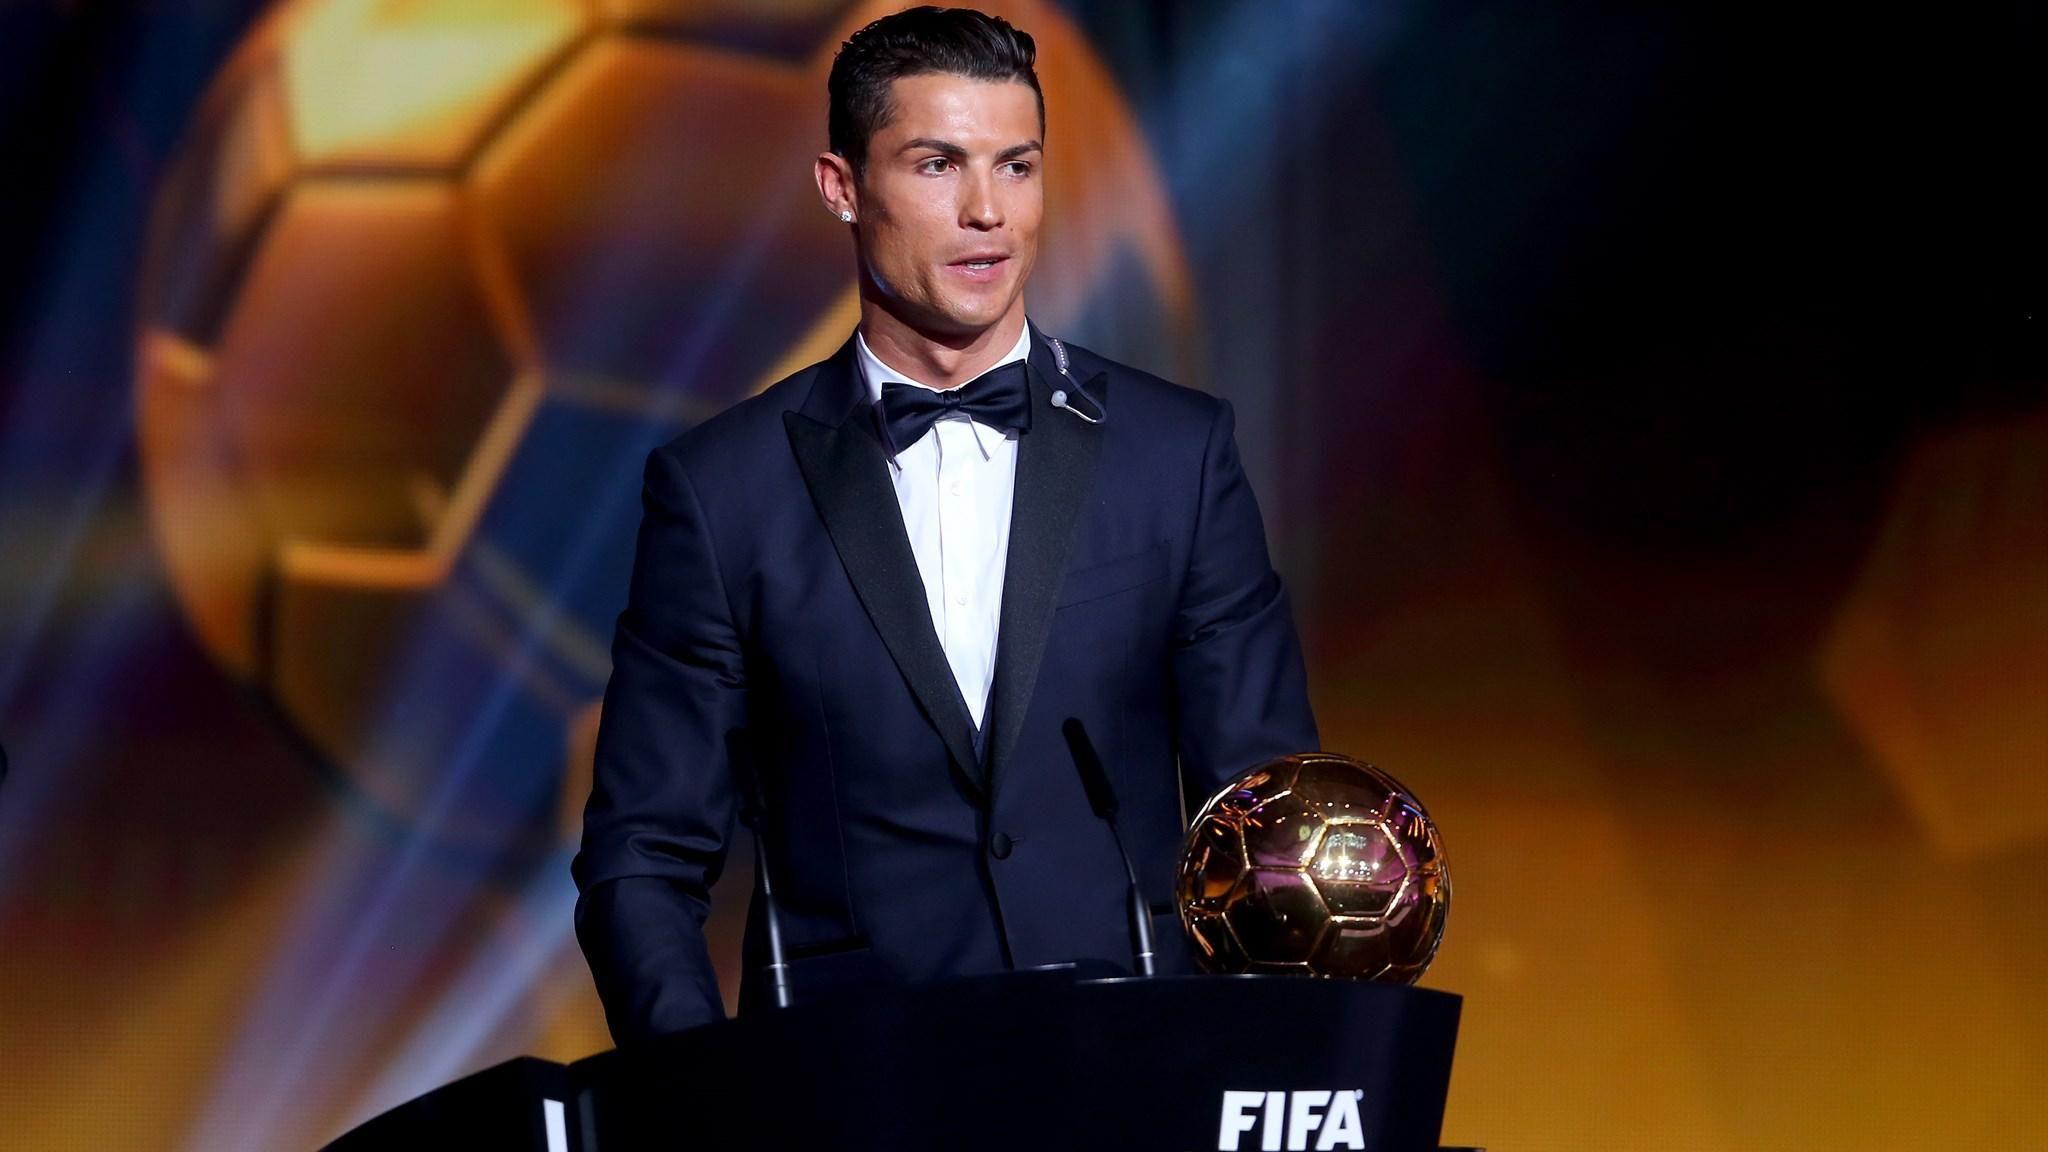 FIFA Ballon d'Or winner Cristiano Ronaldo of Portugal and Real